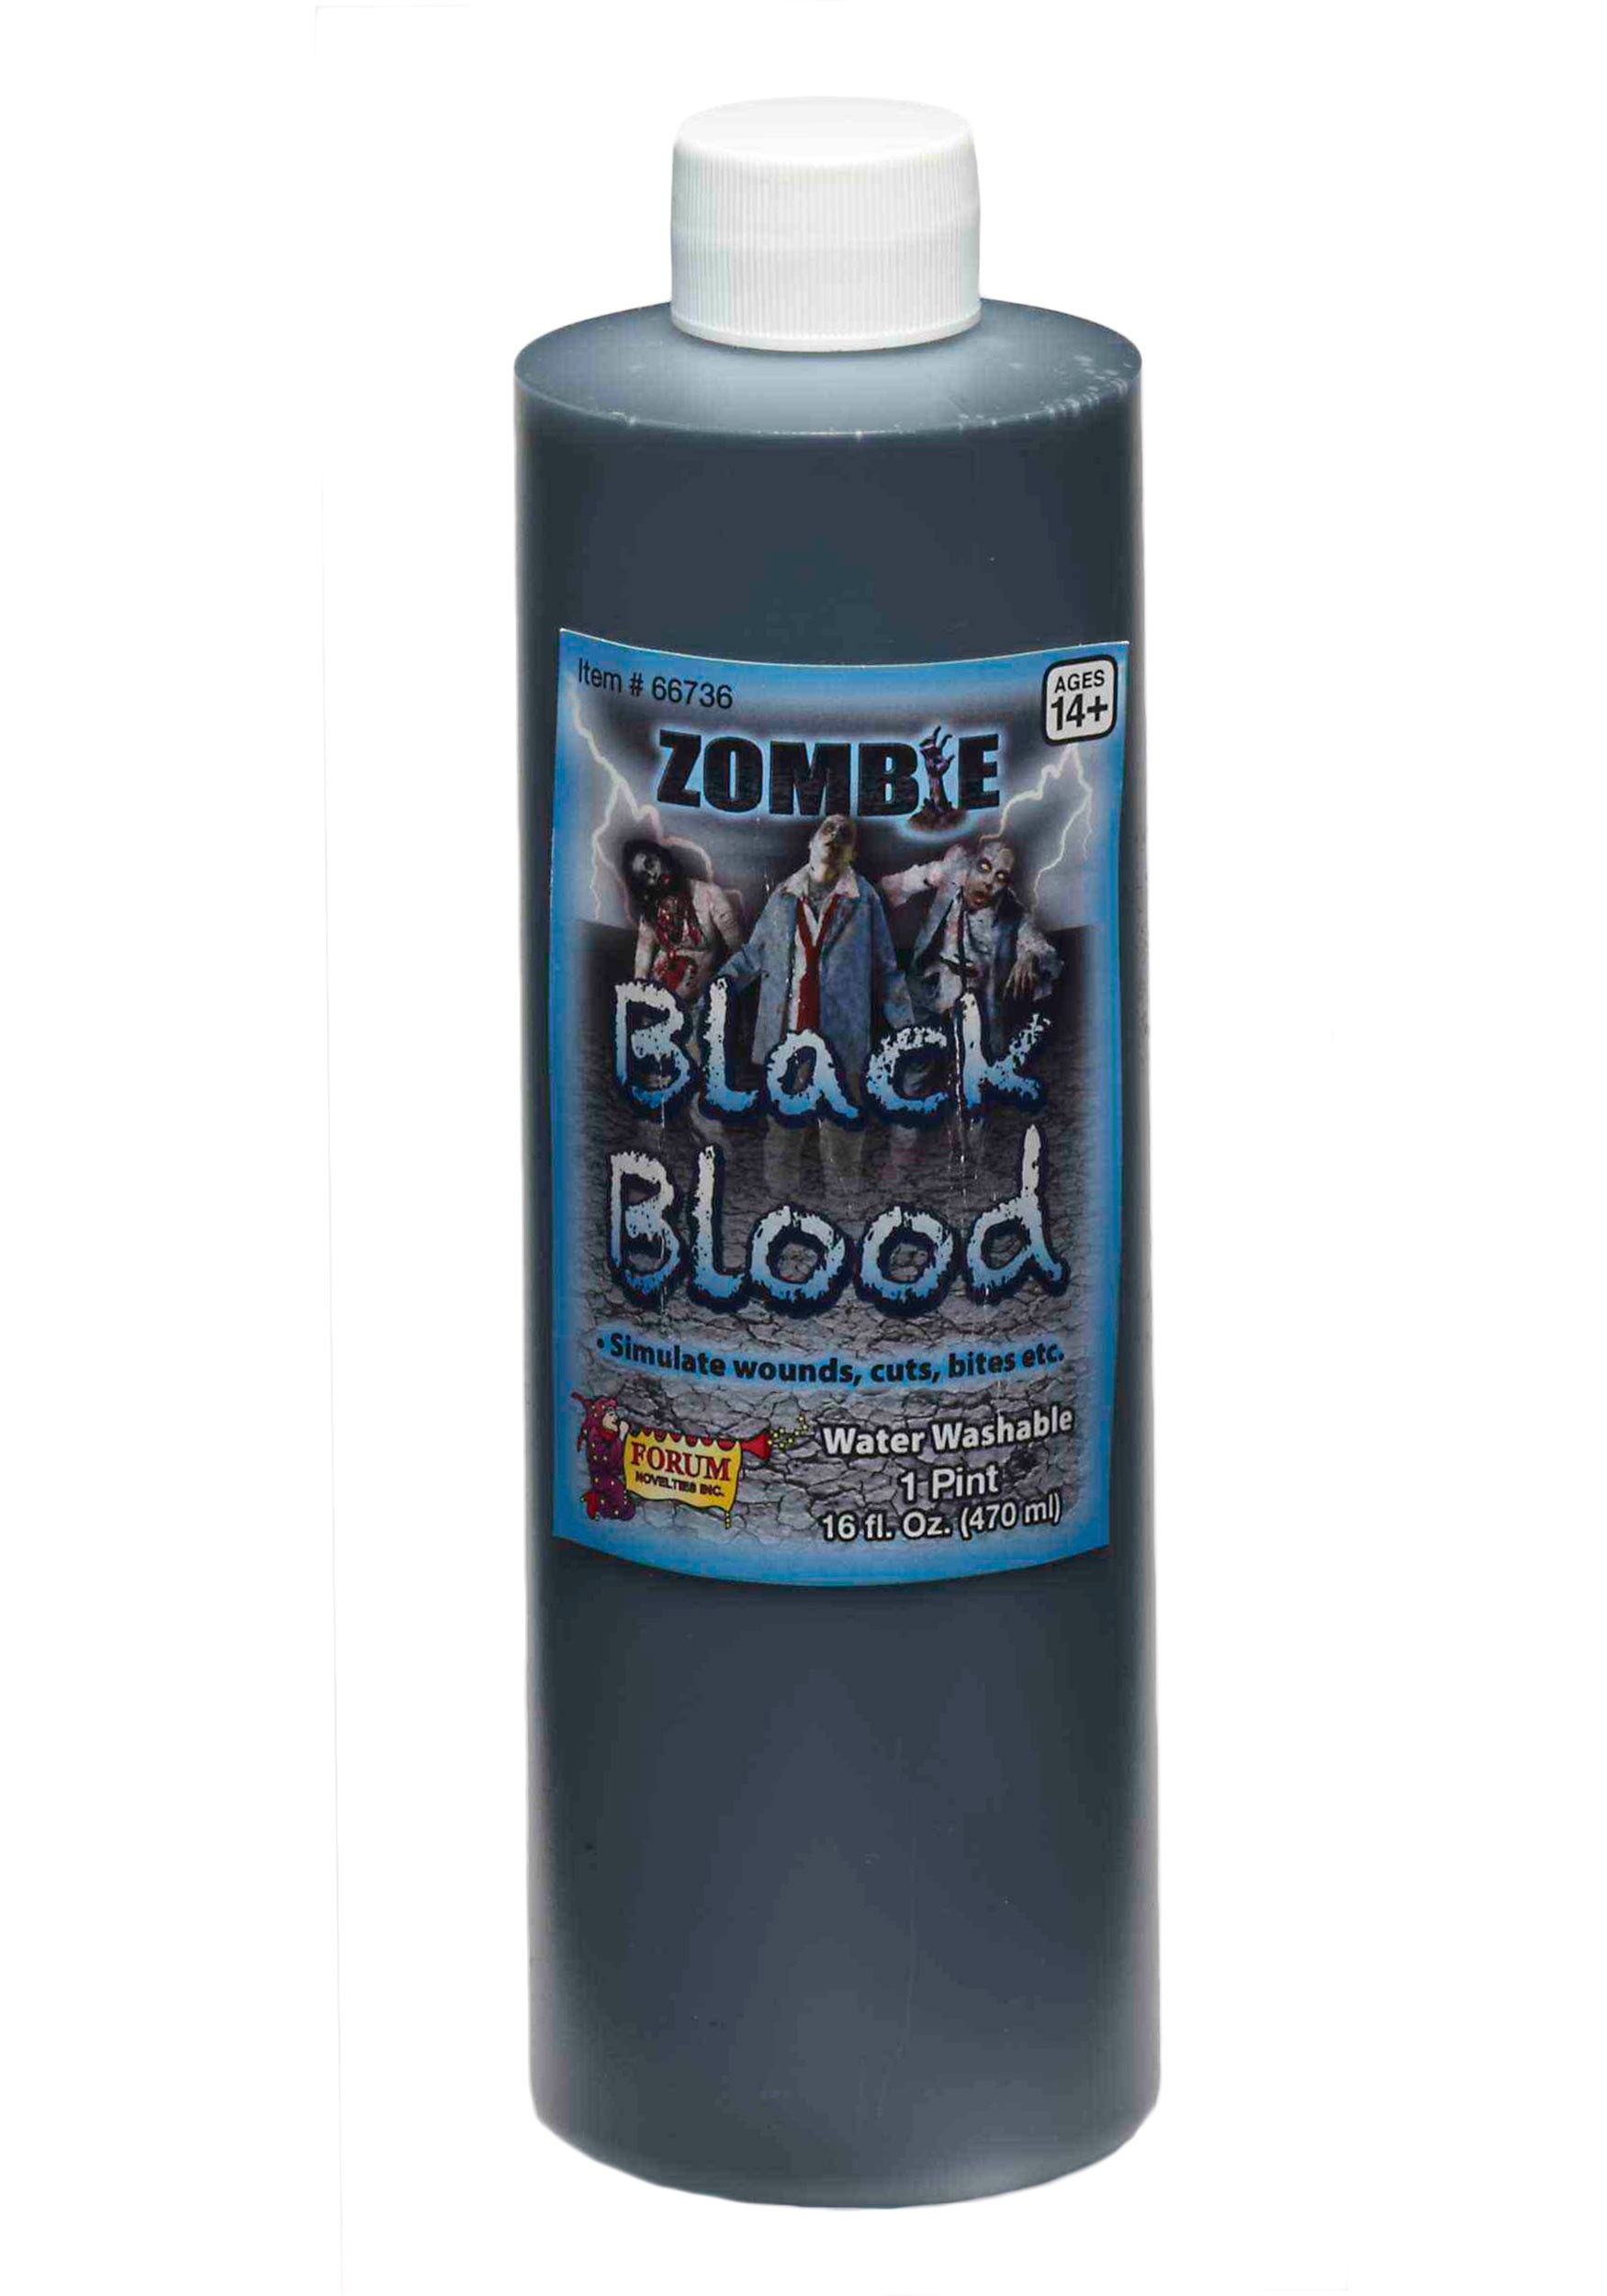 Forum Zombie Black Blood